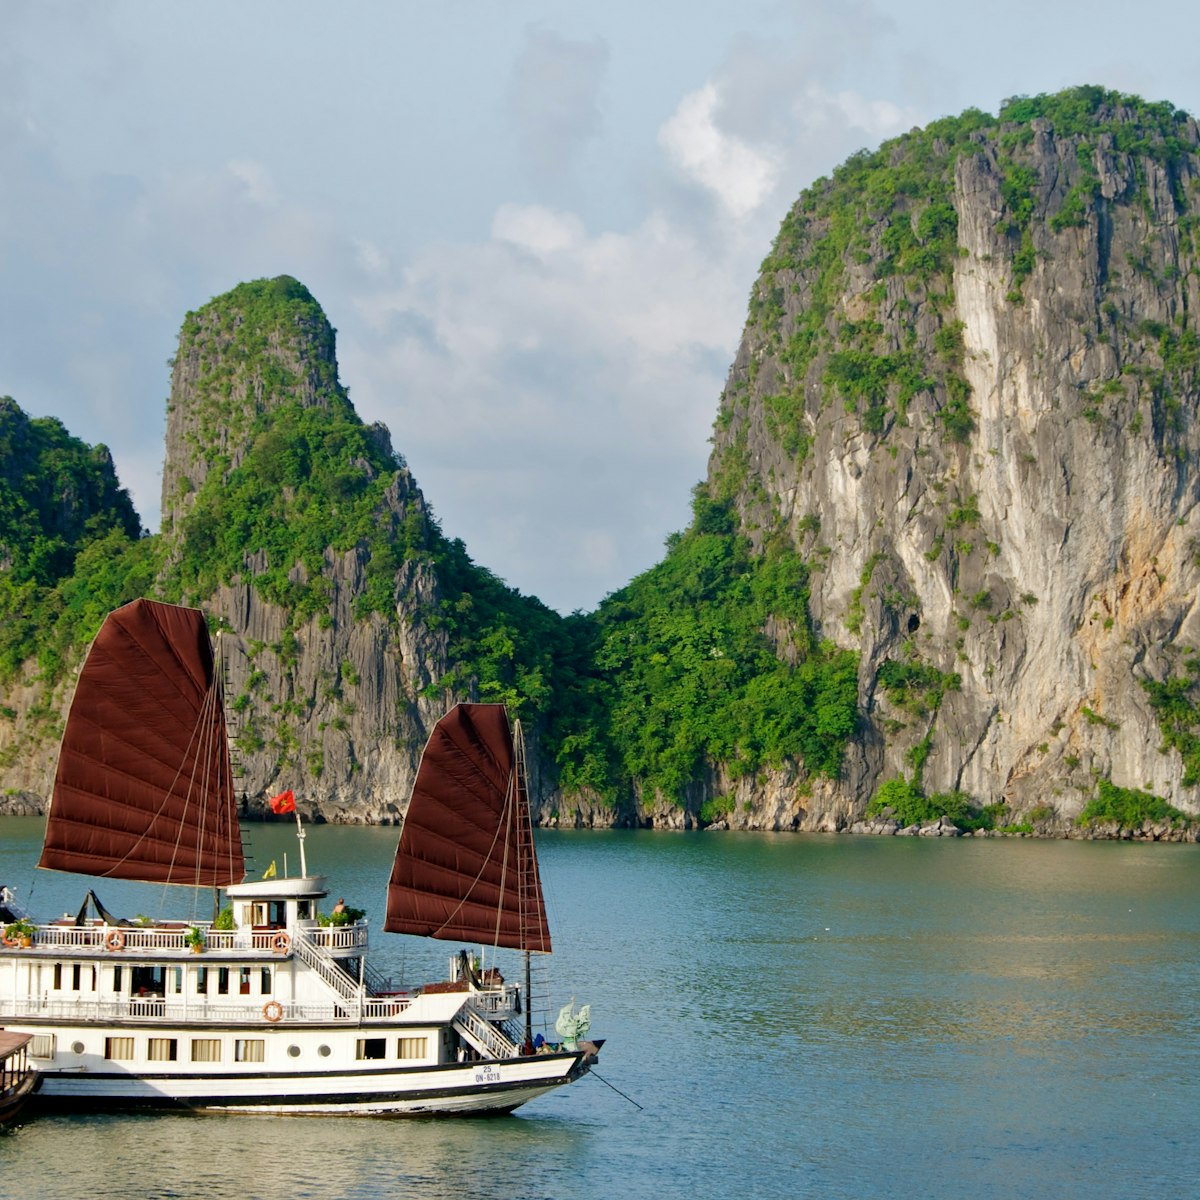 Cruise ship at anchor in Bai Tu Long Bay, Vietnam.